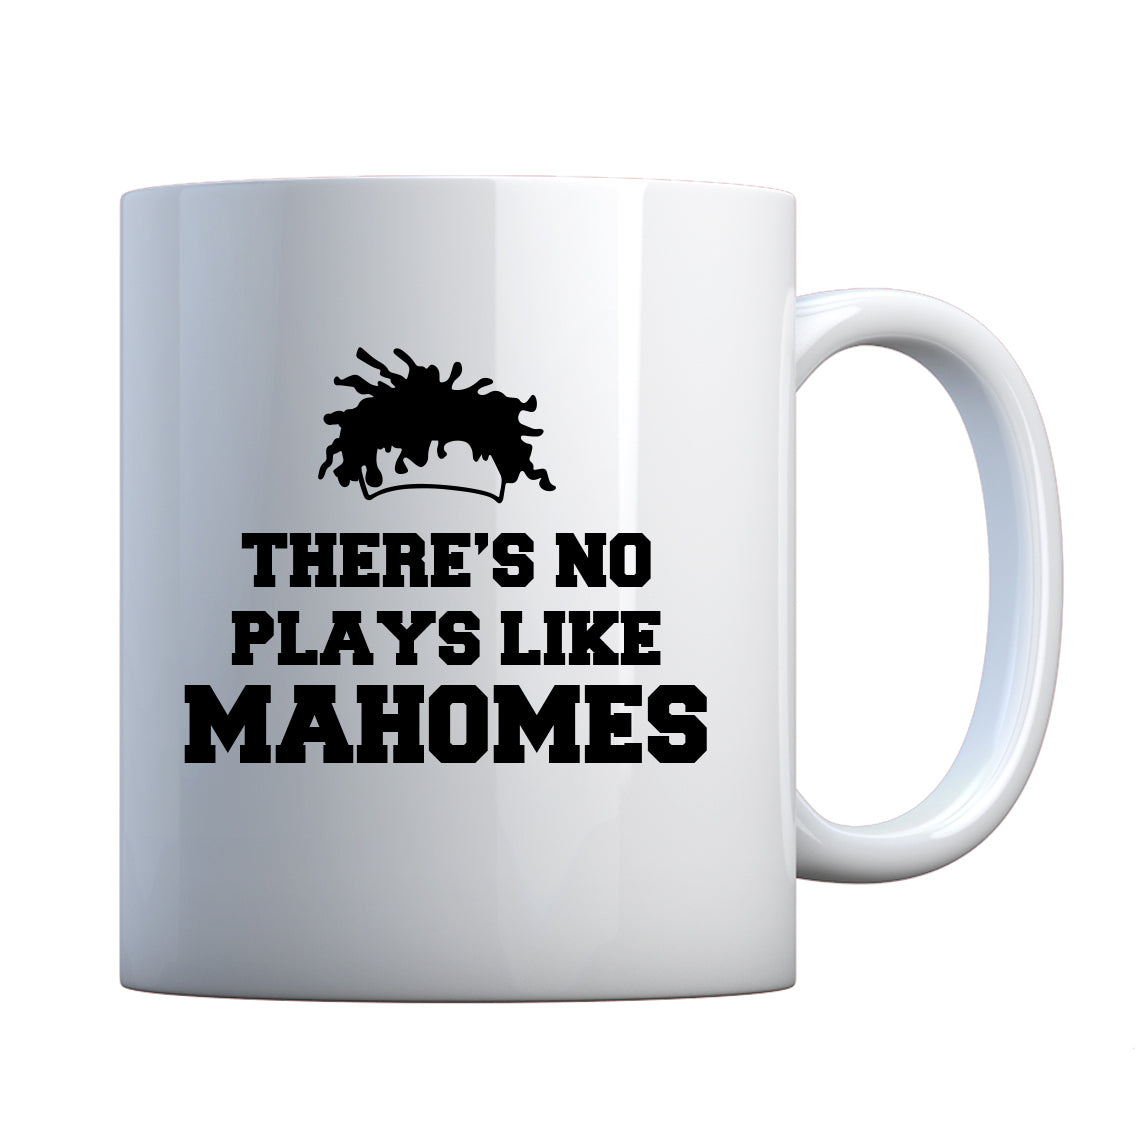 There's No Plays Like Mahomes Ceramic Gift Mug